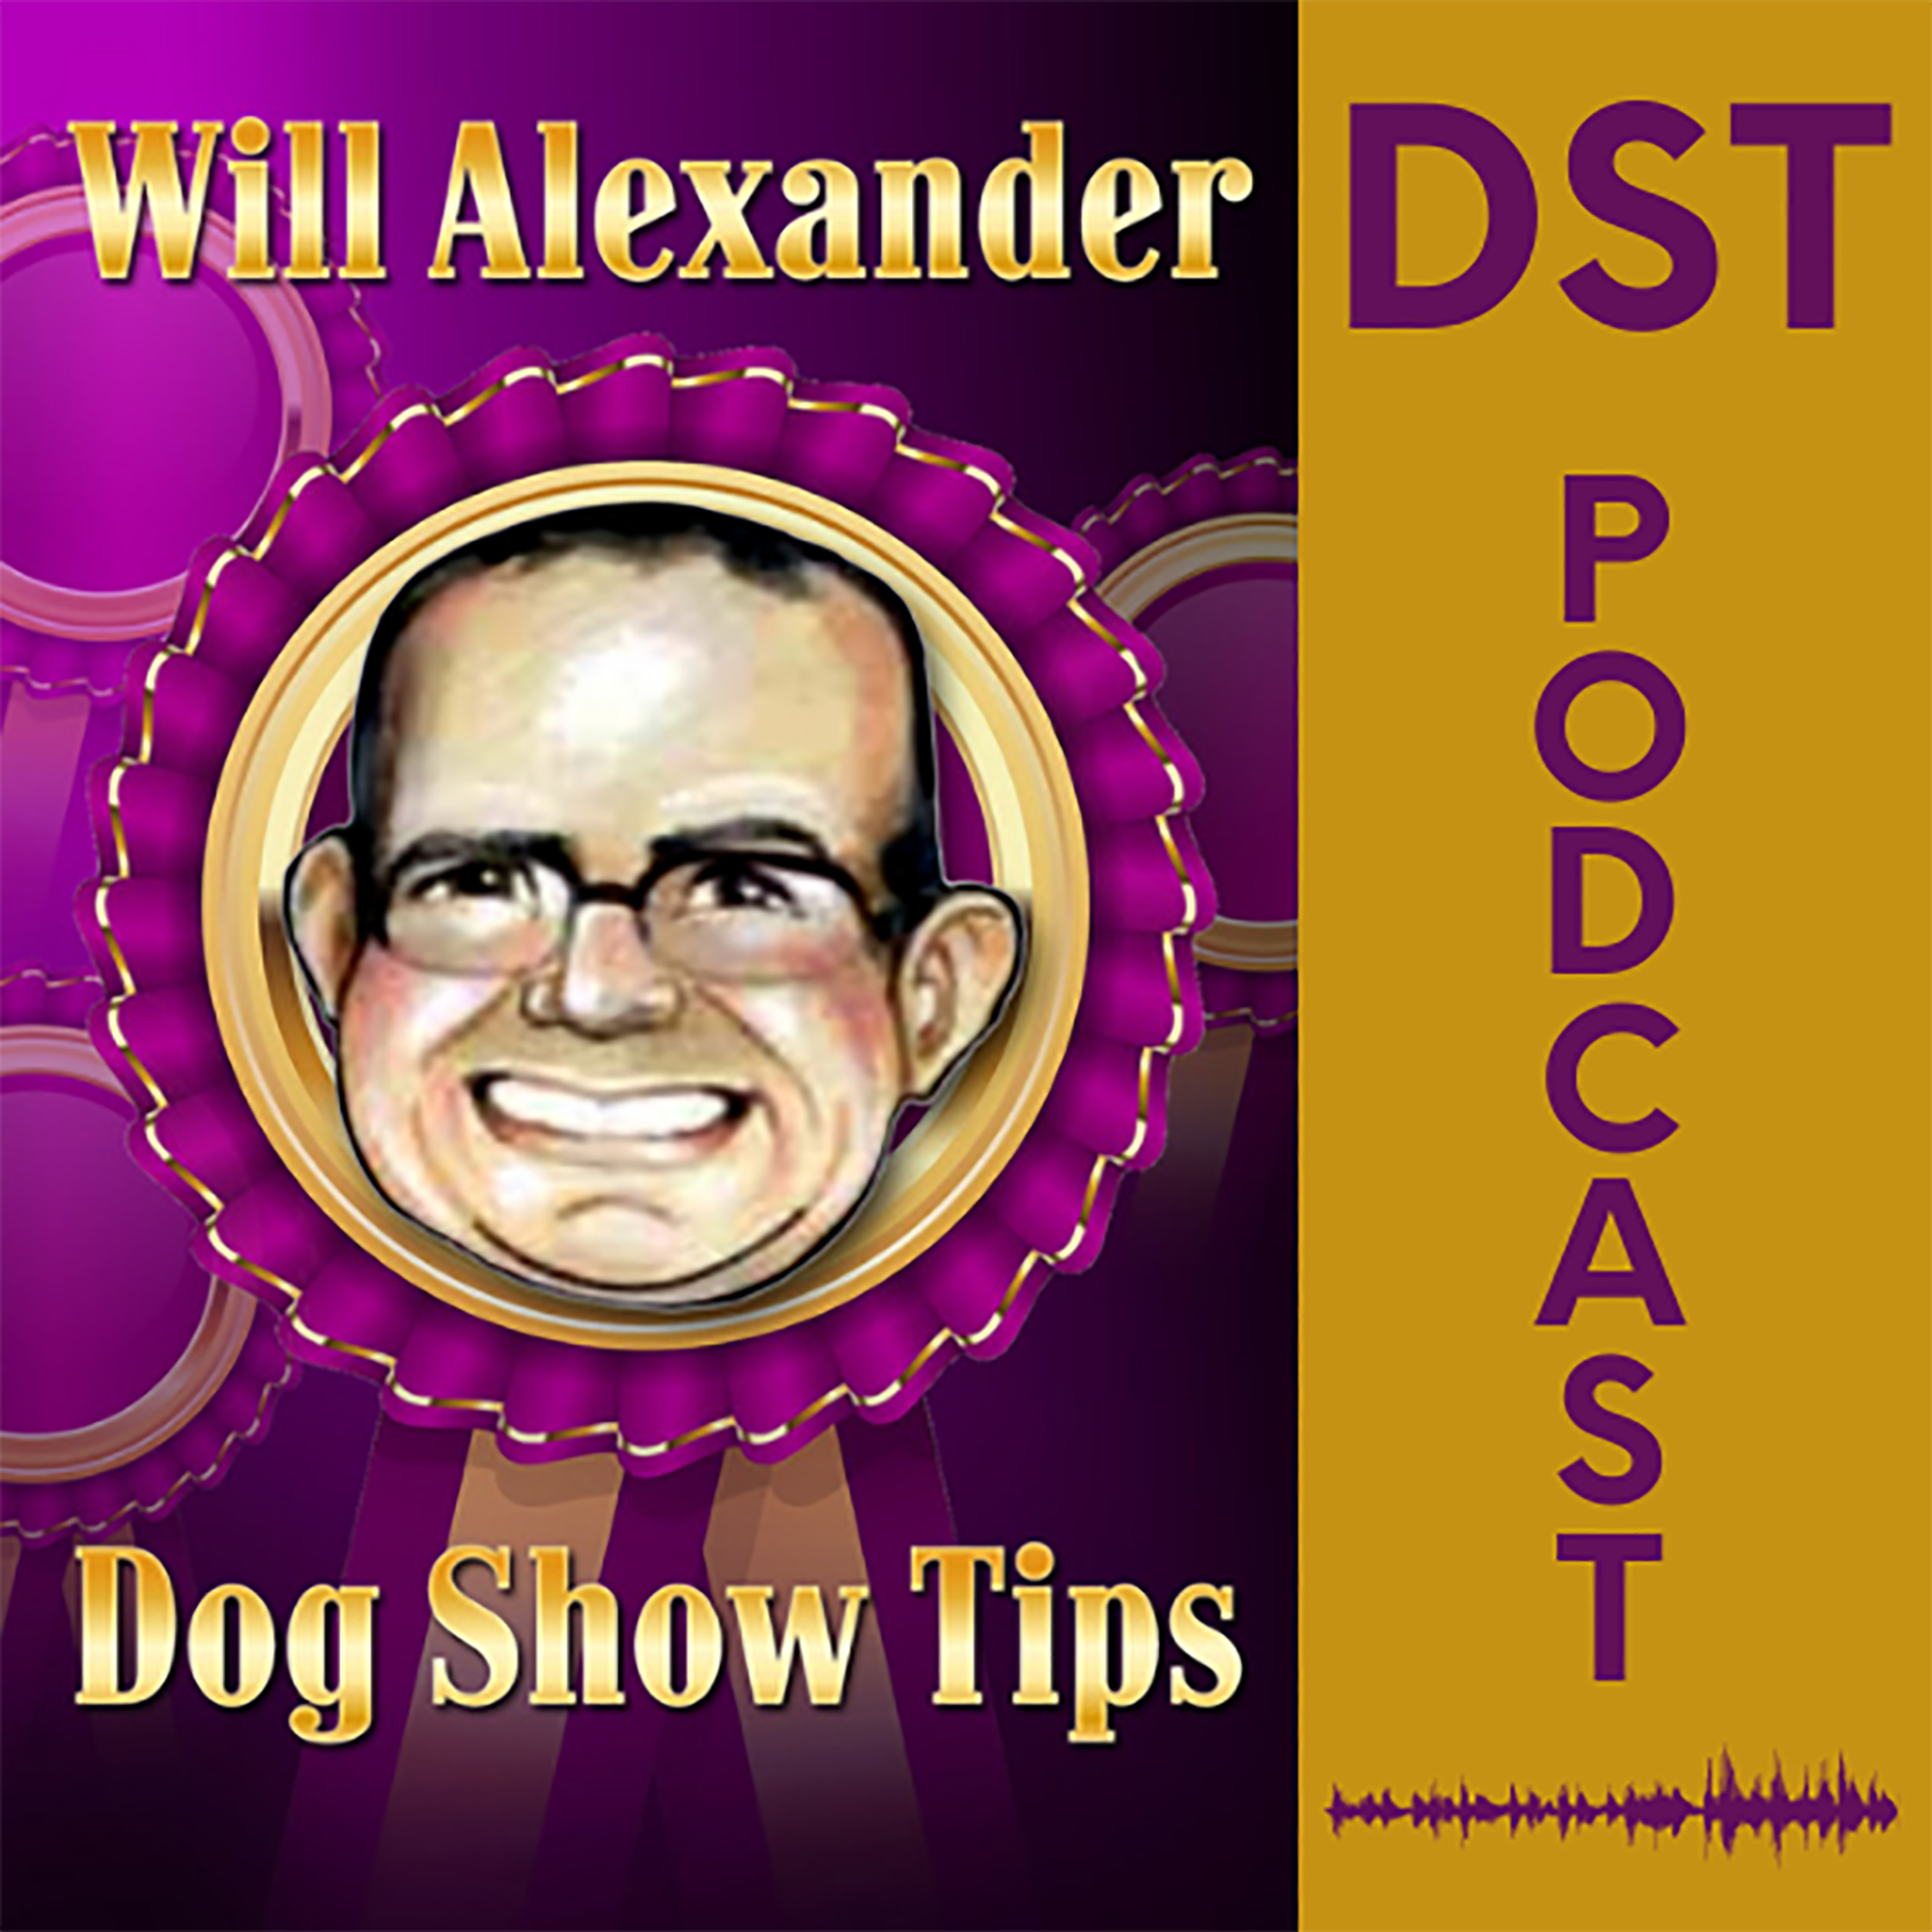 Dog Show Tips - Pat Blenkey & Brian Casey interviewed by Will Alexander